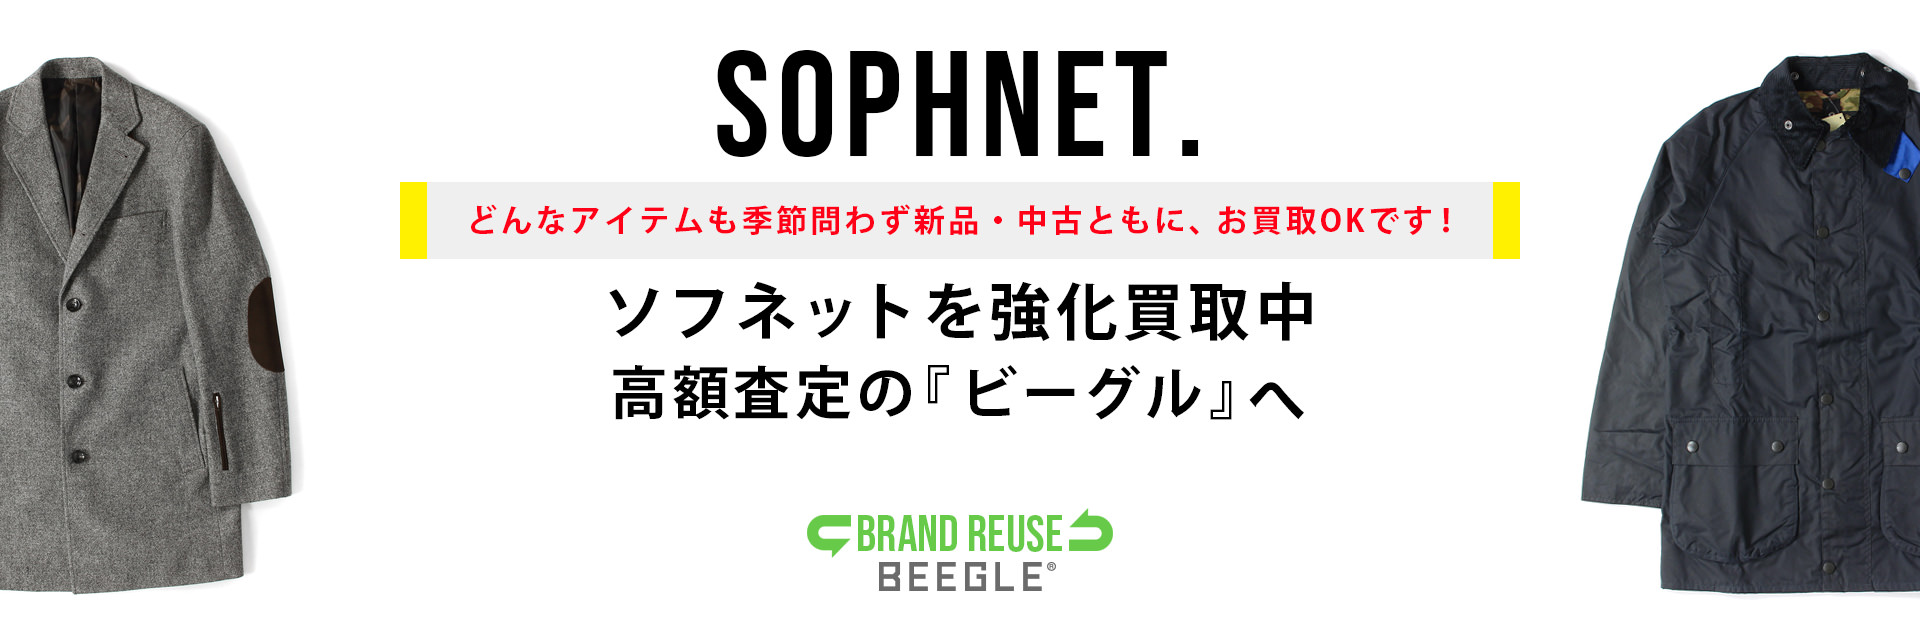 SOPHNET.